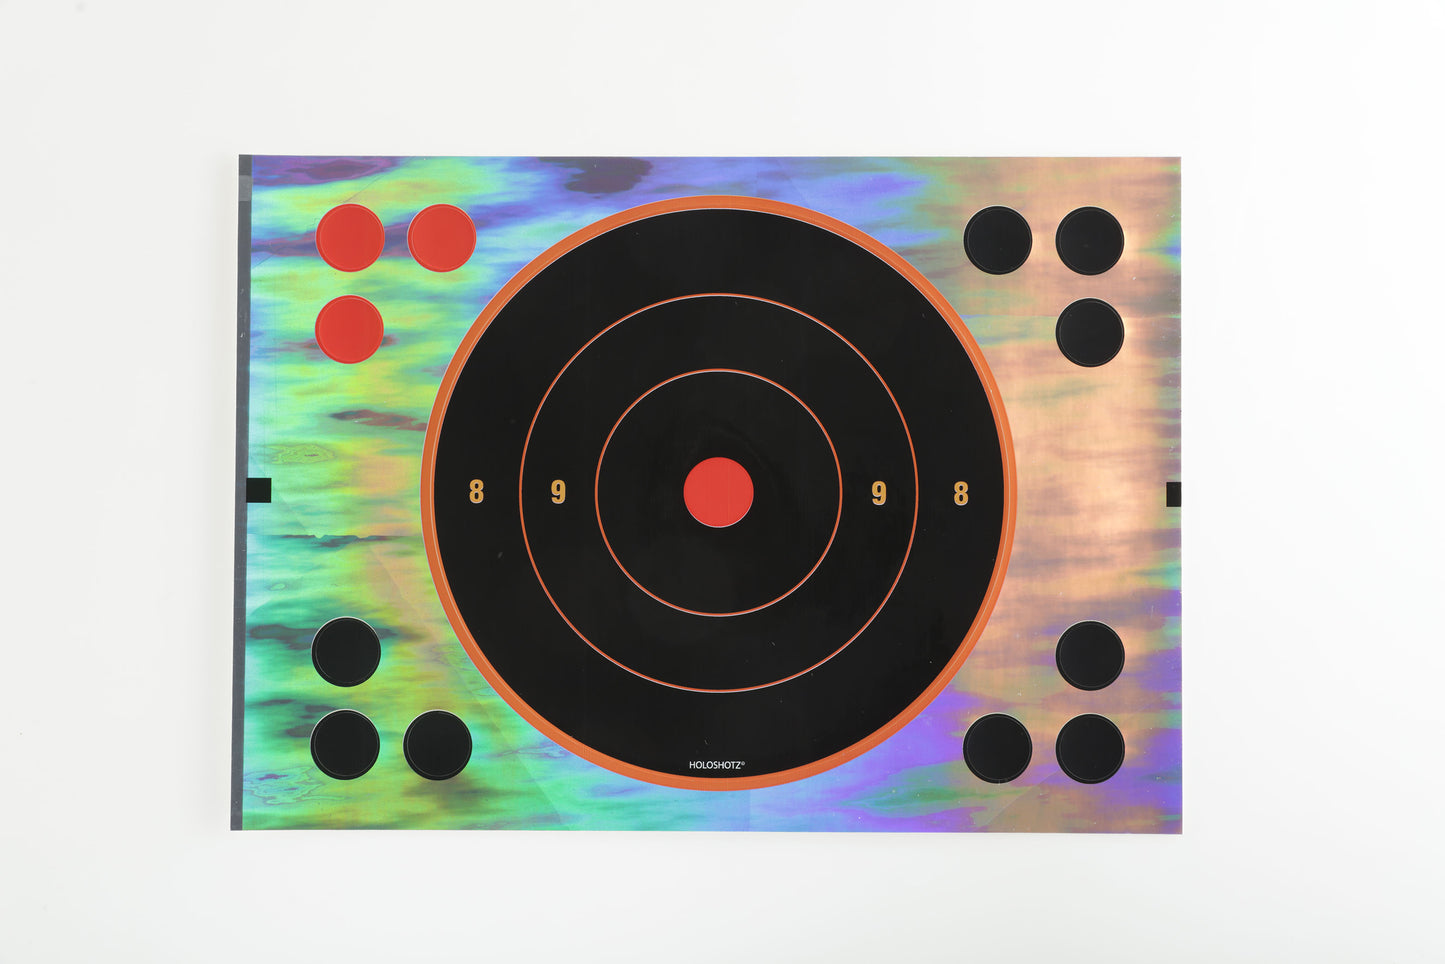 6" Bullseye Reflective Halo Target, 4 Sheets Per Pack